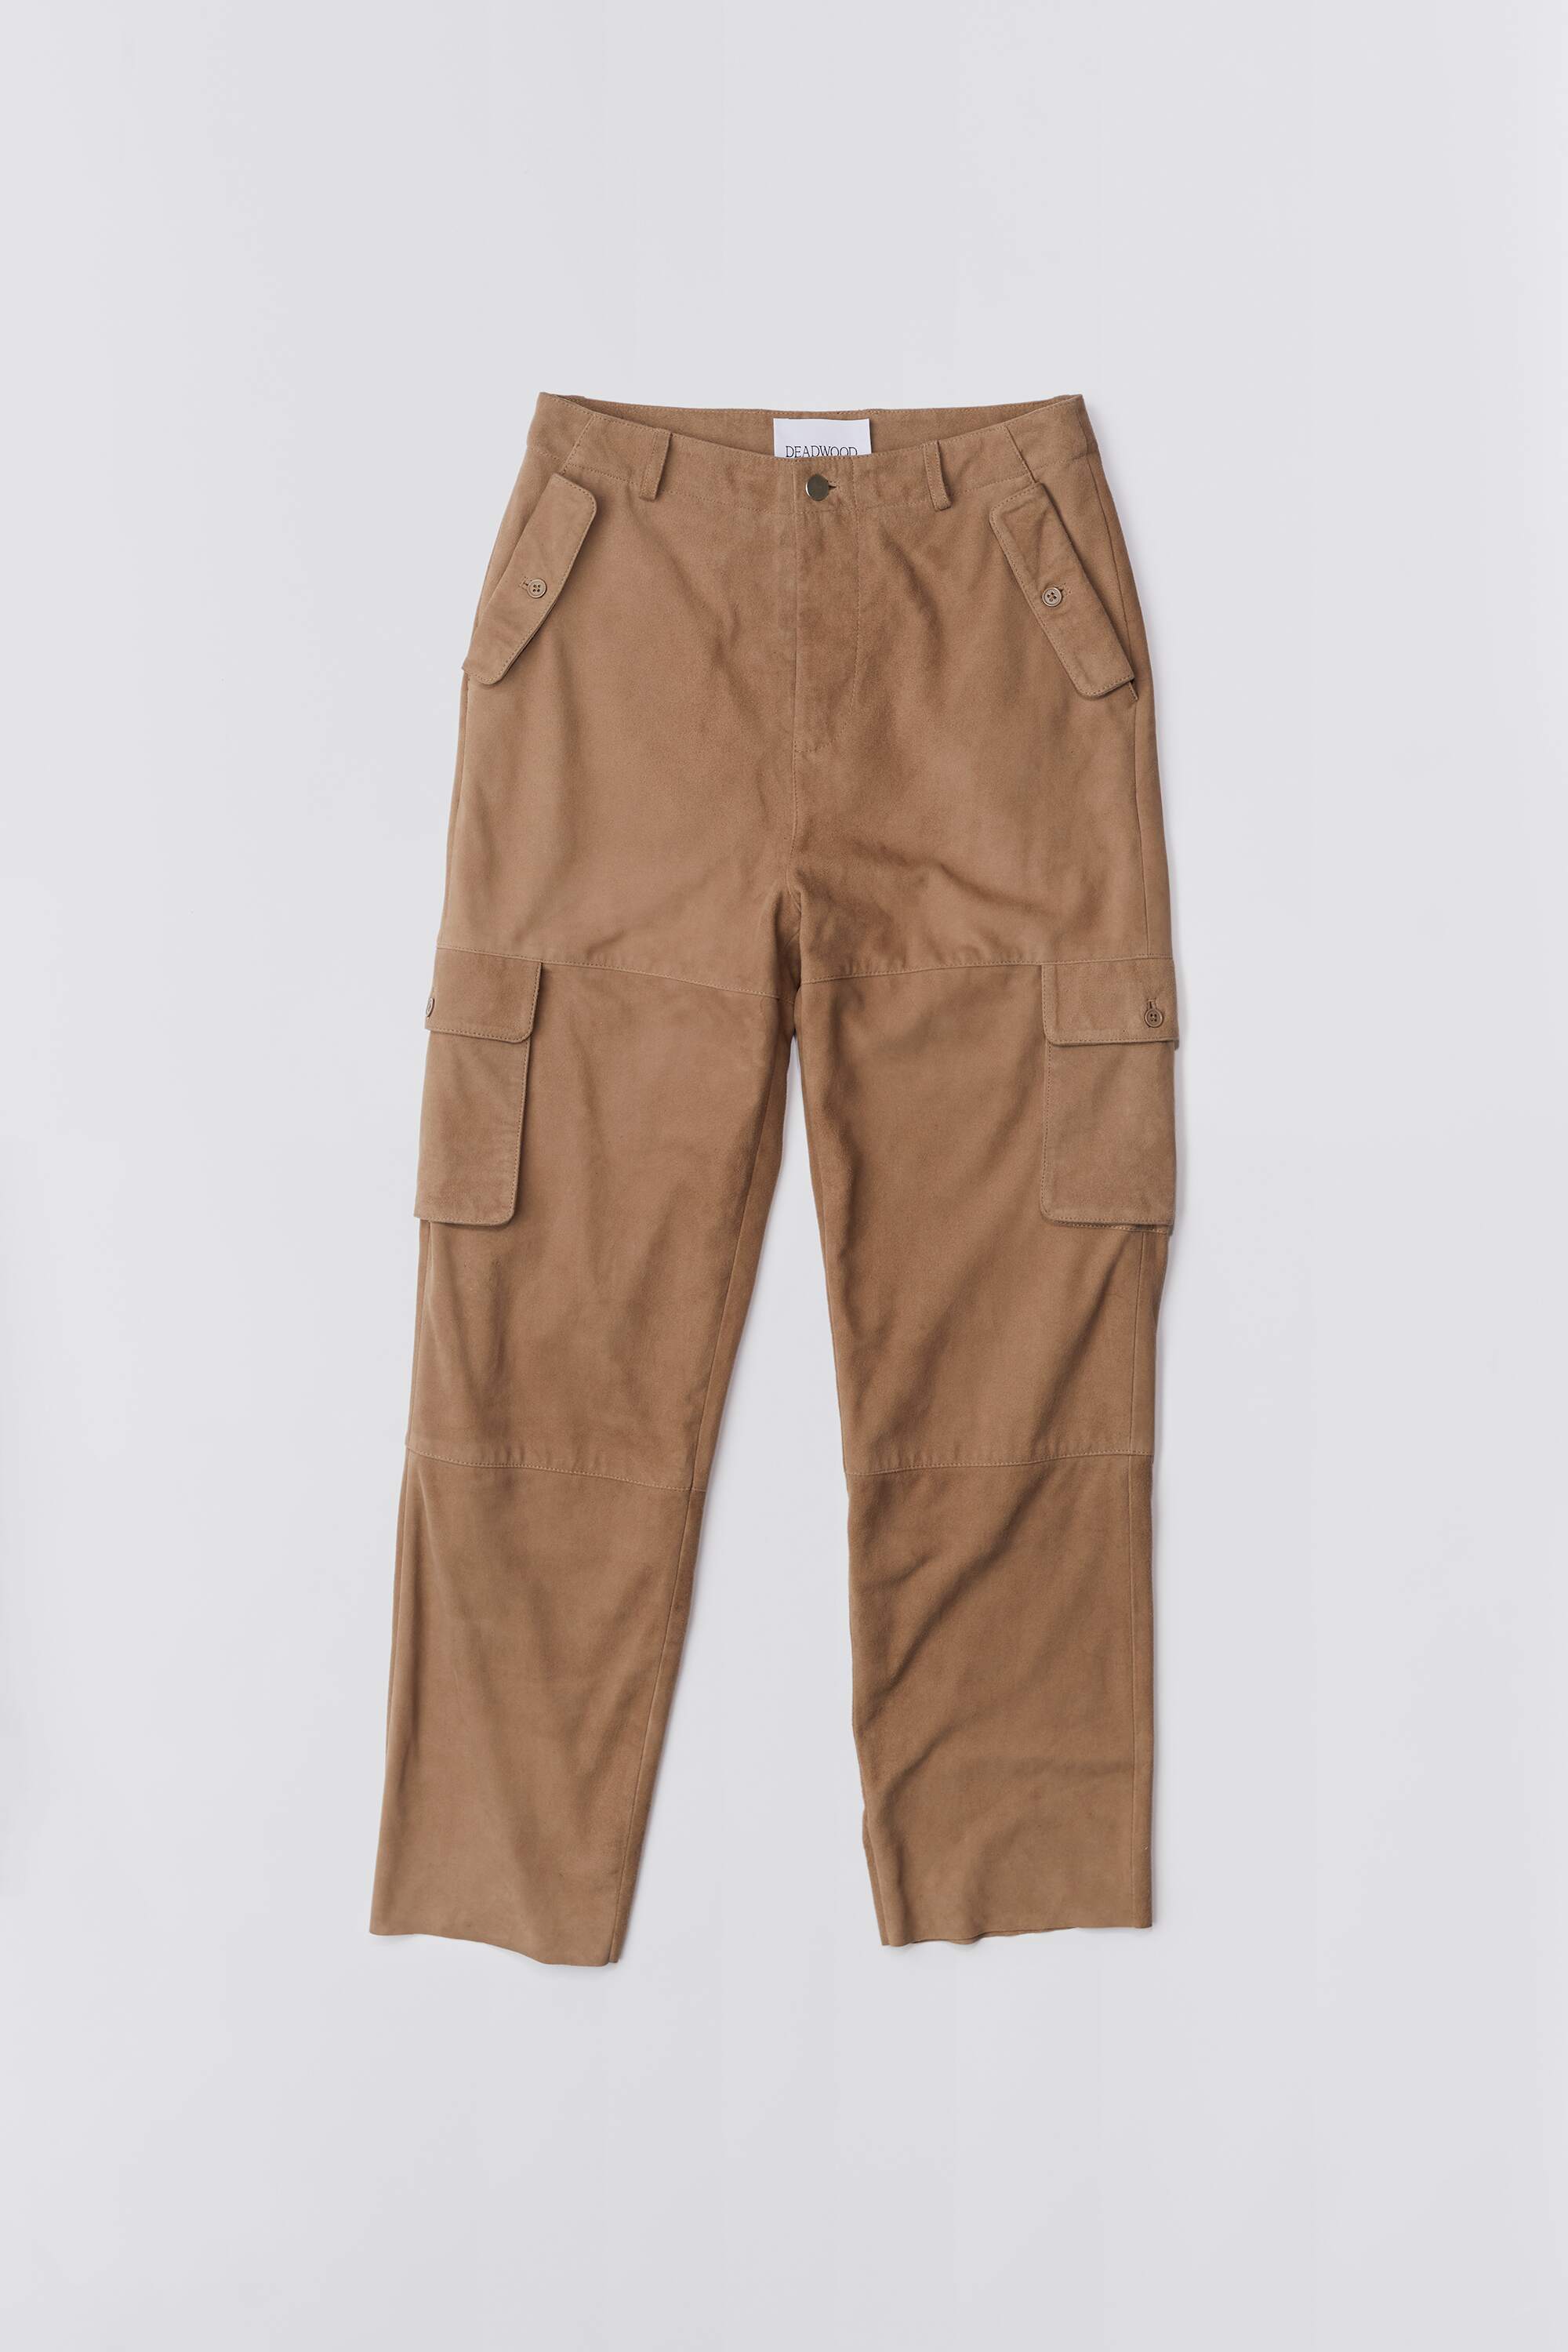 Deadwood CONVOY PANTS - Leather trousers - black - Zalando